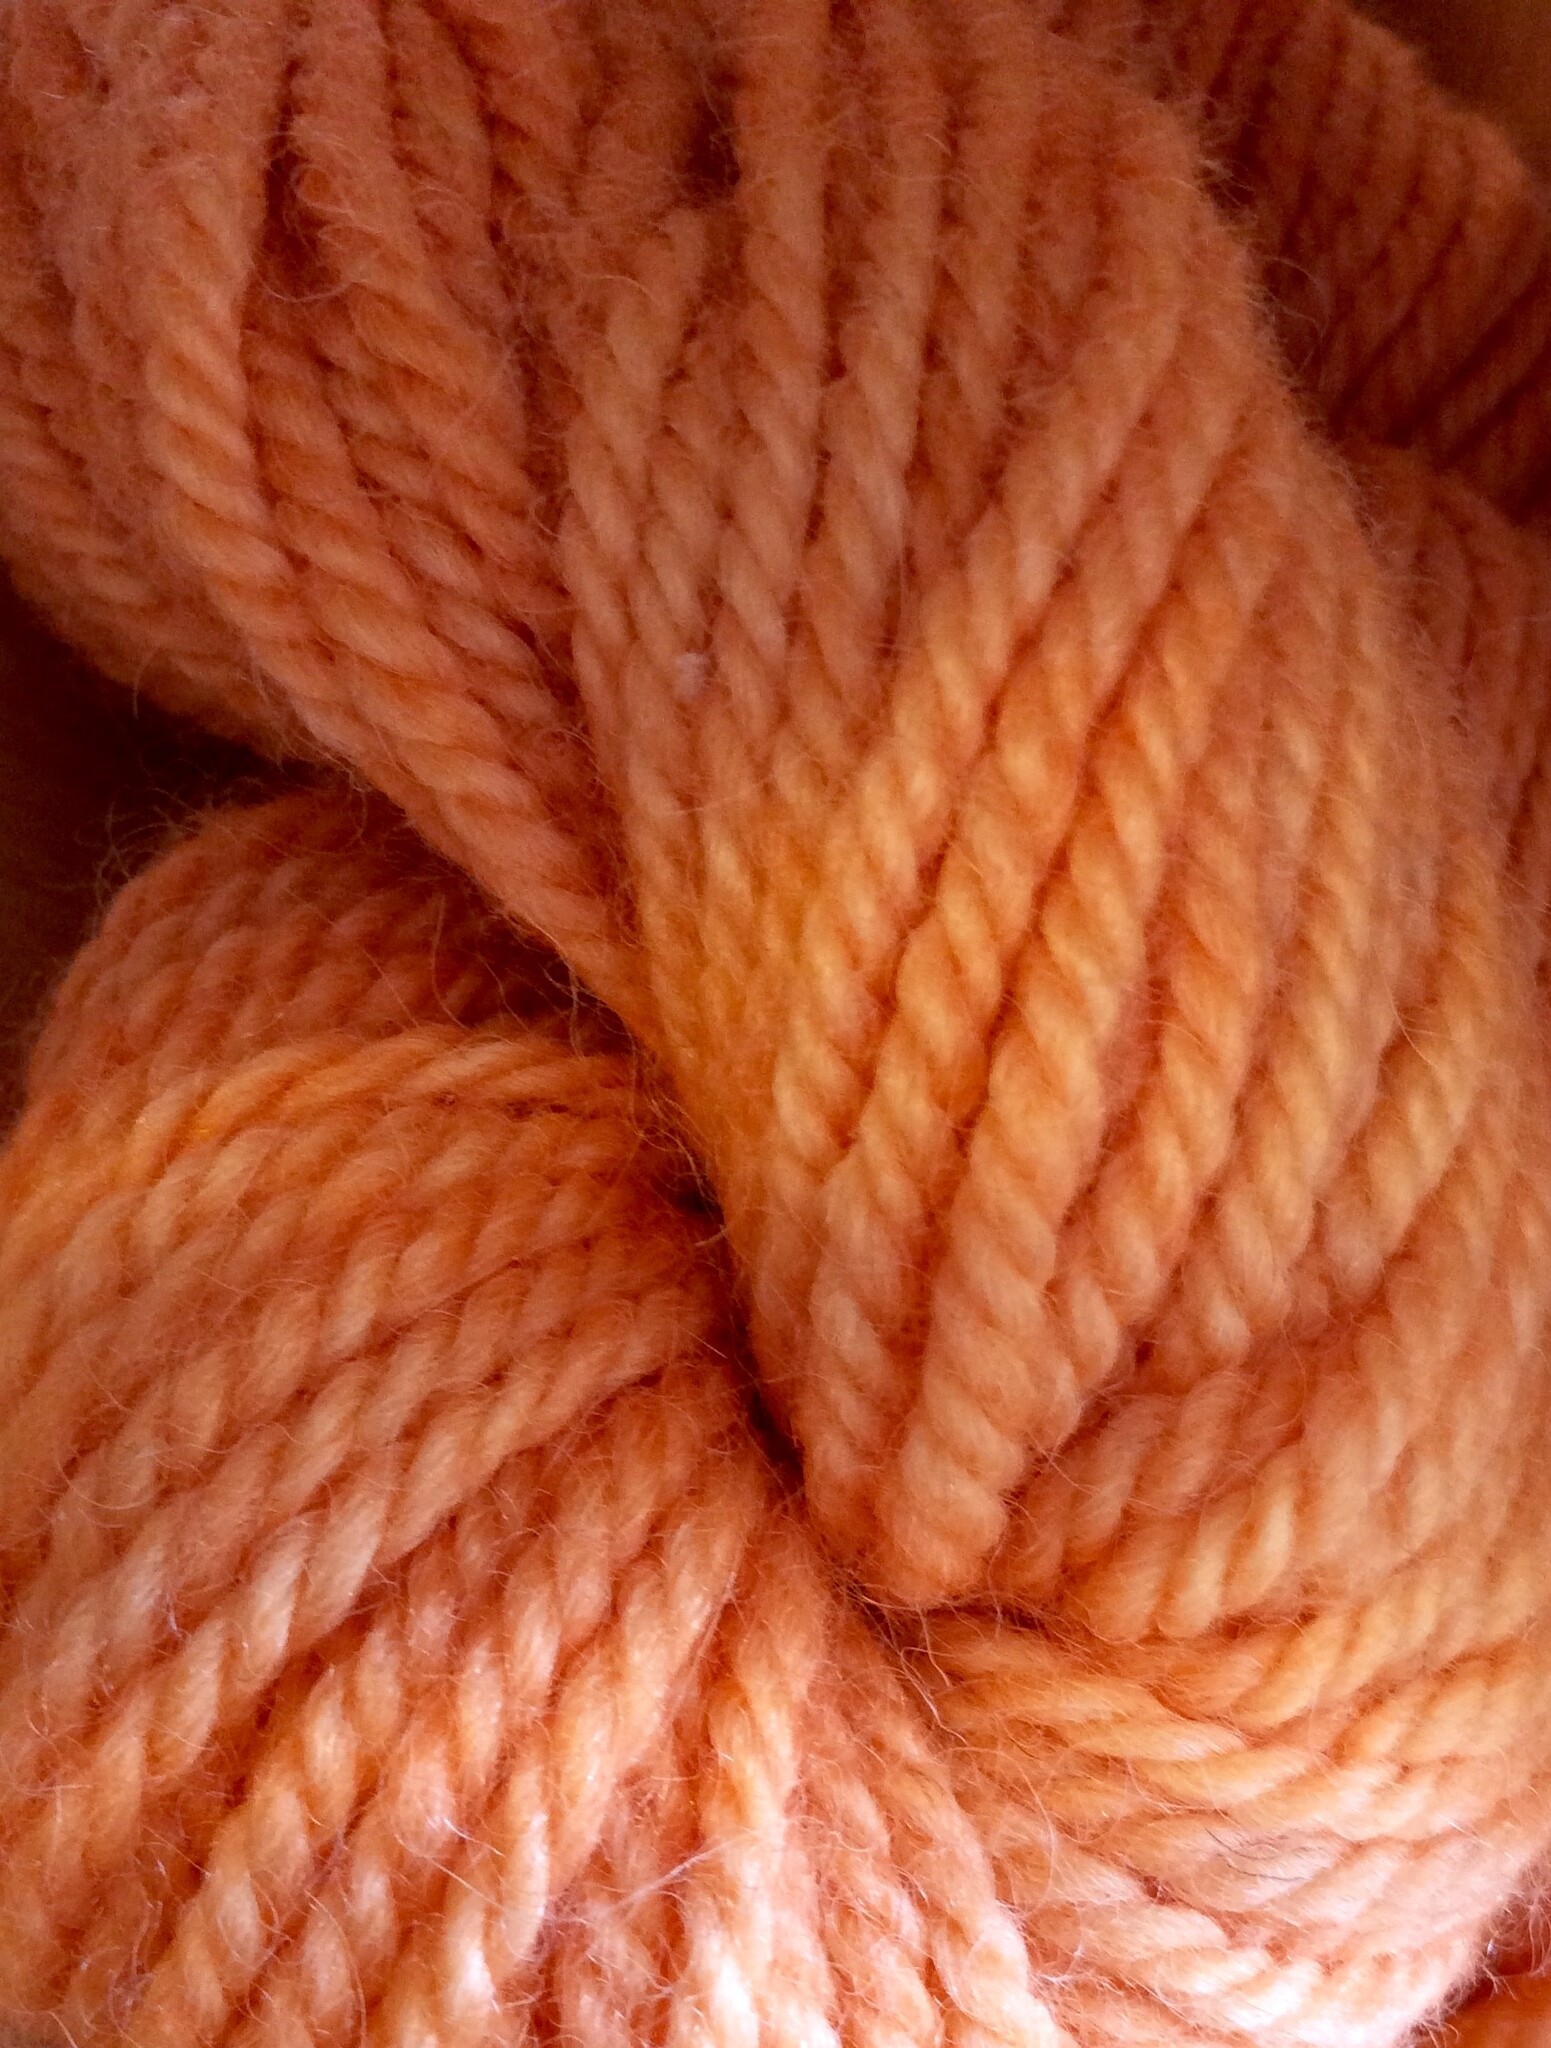 Hand Dyed Peach Bulky 3.5 Oz 110 Yds 3 Ply 70% ALapca 30% Merino